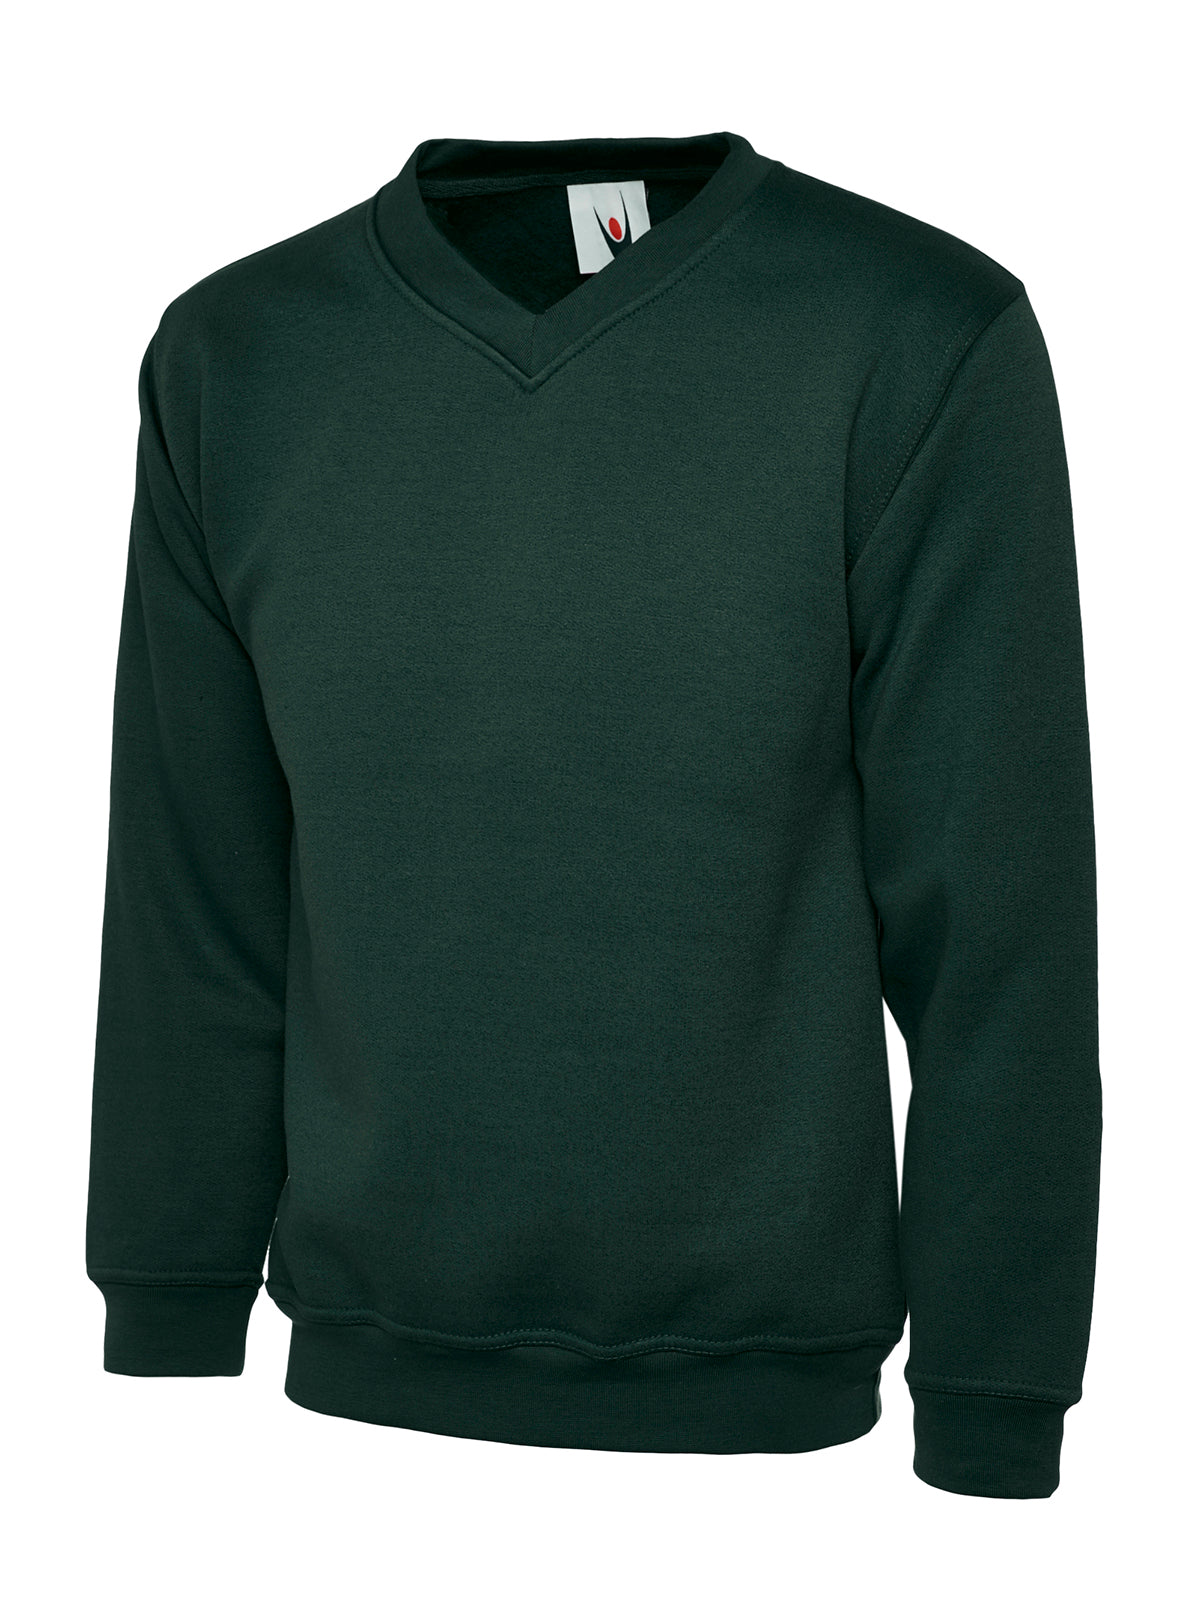 Uneek Premium V-Neck Sweatshirt UC204 - Bottle Green